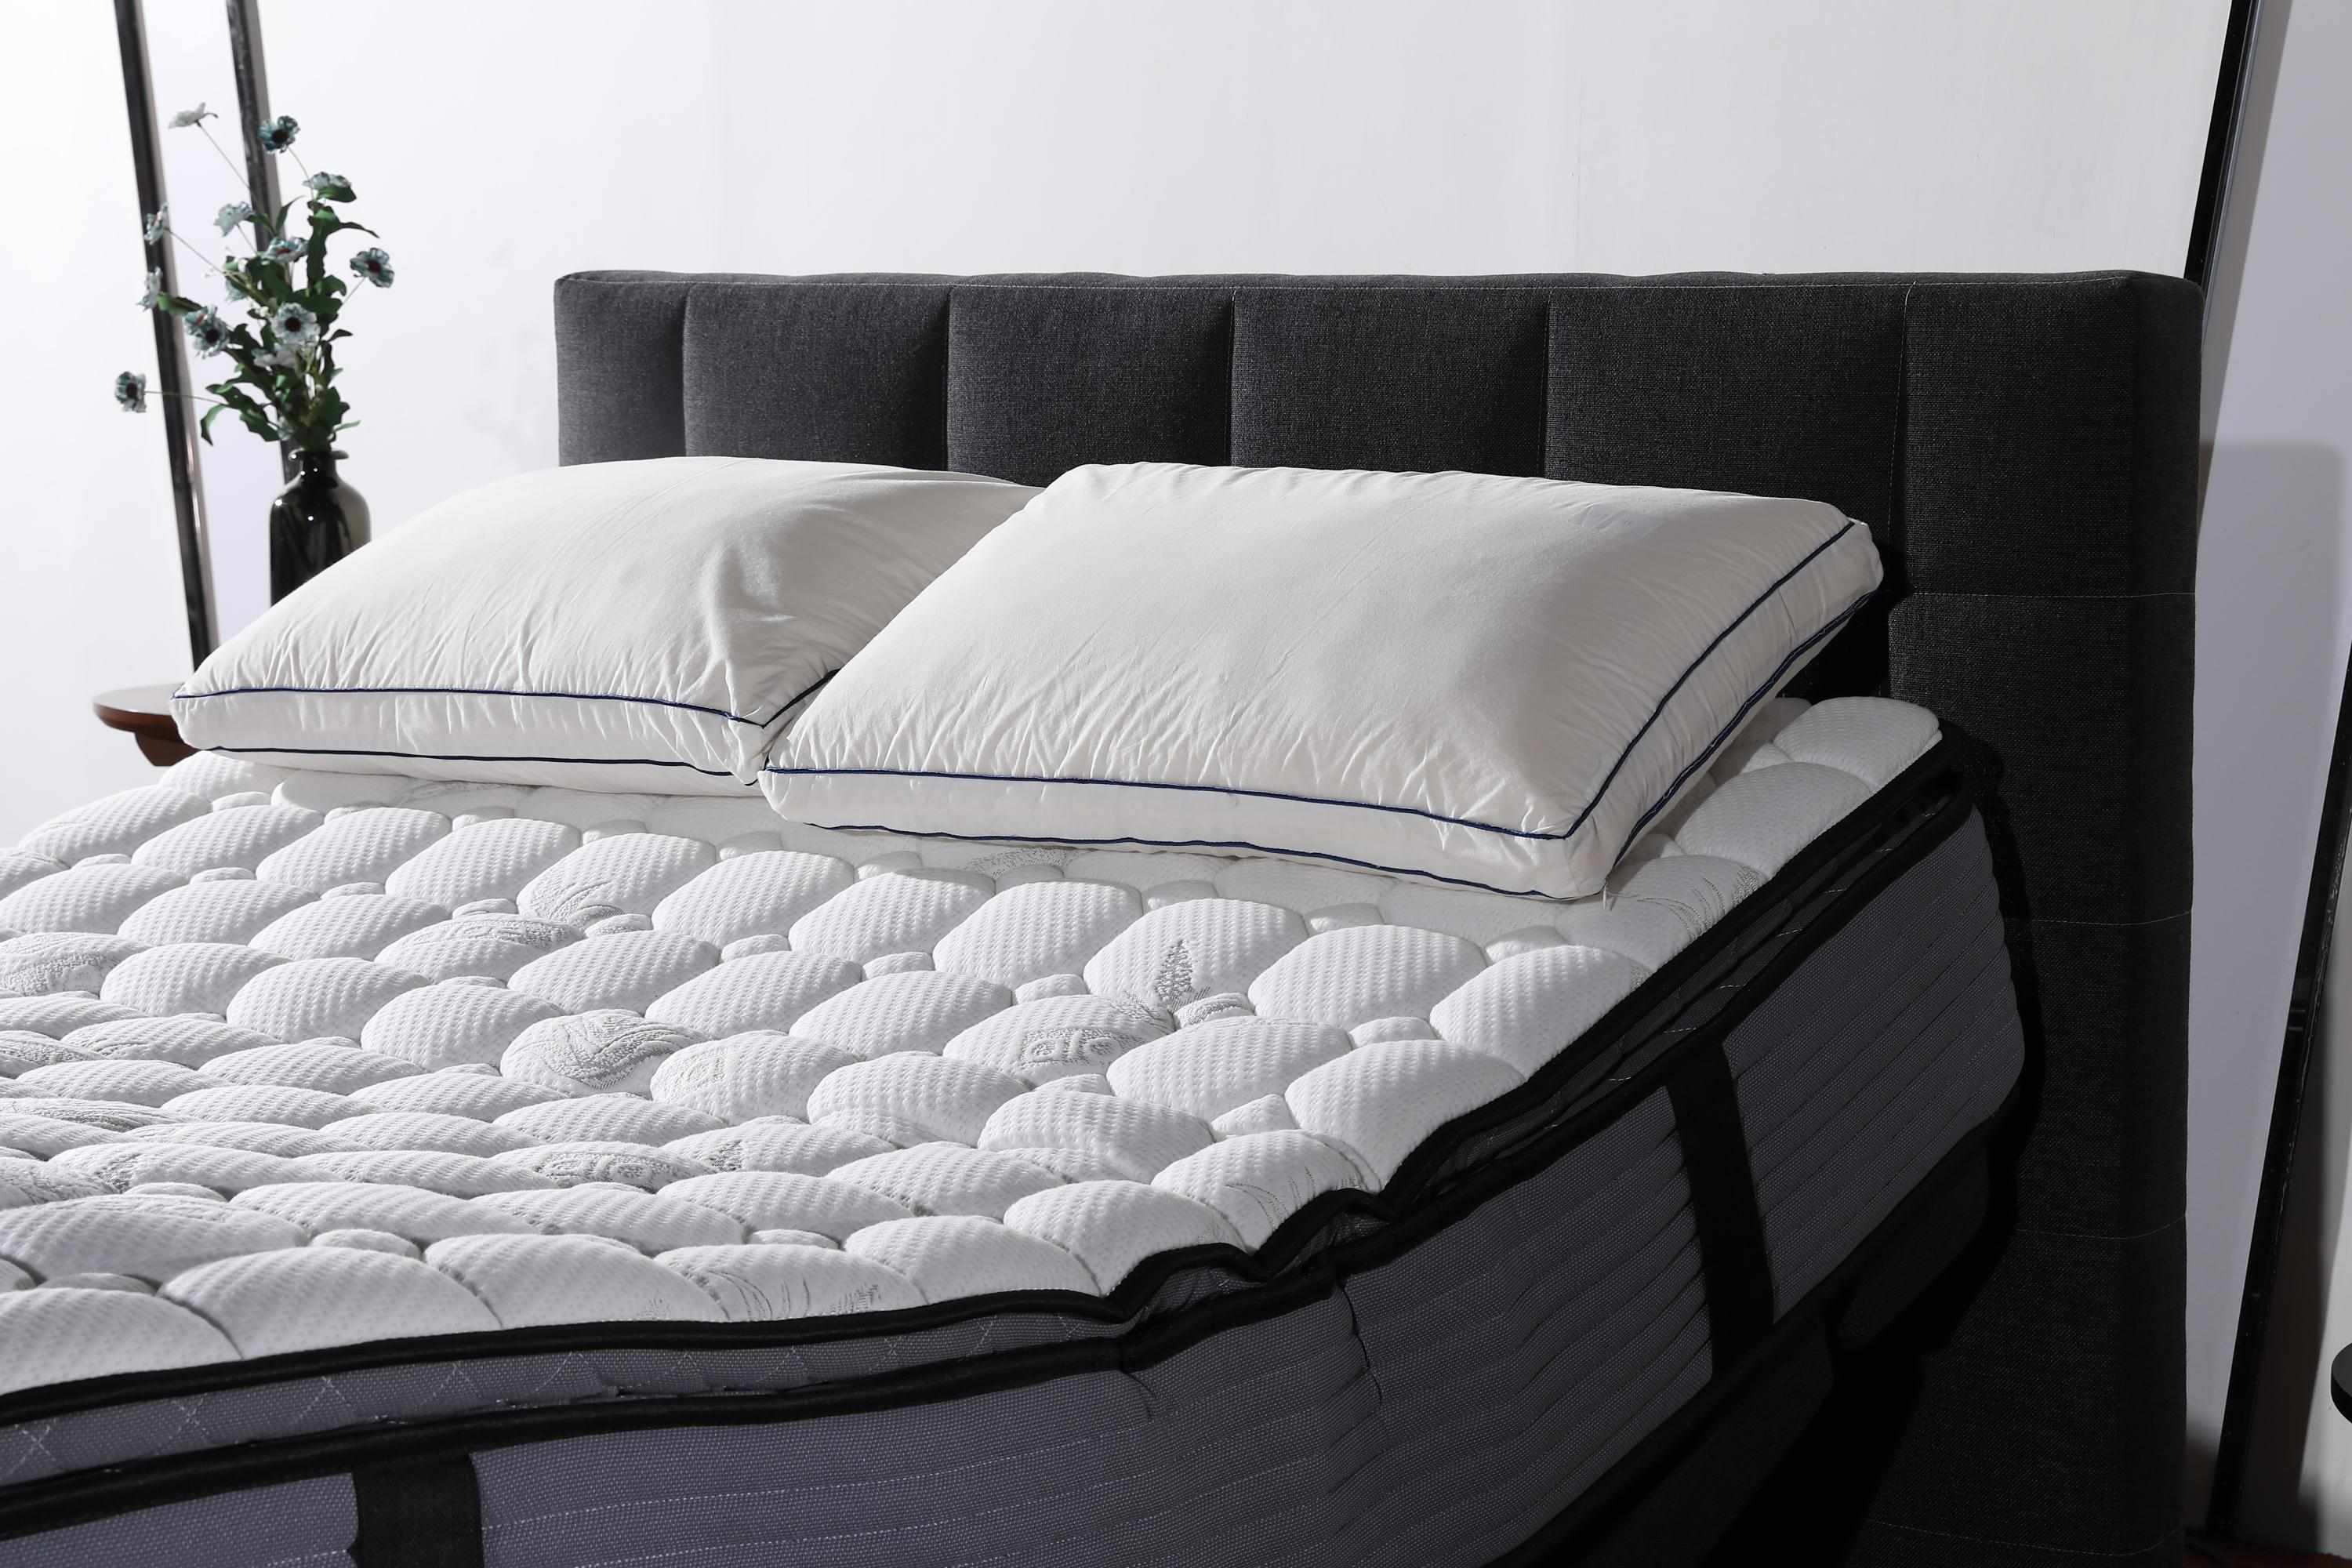 JLH-bed in box mattress | Roll-Up Mattress | JLH-1